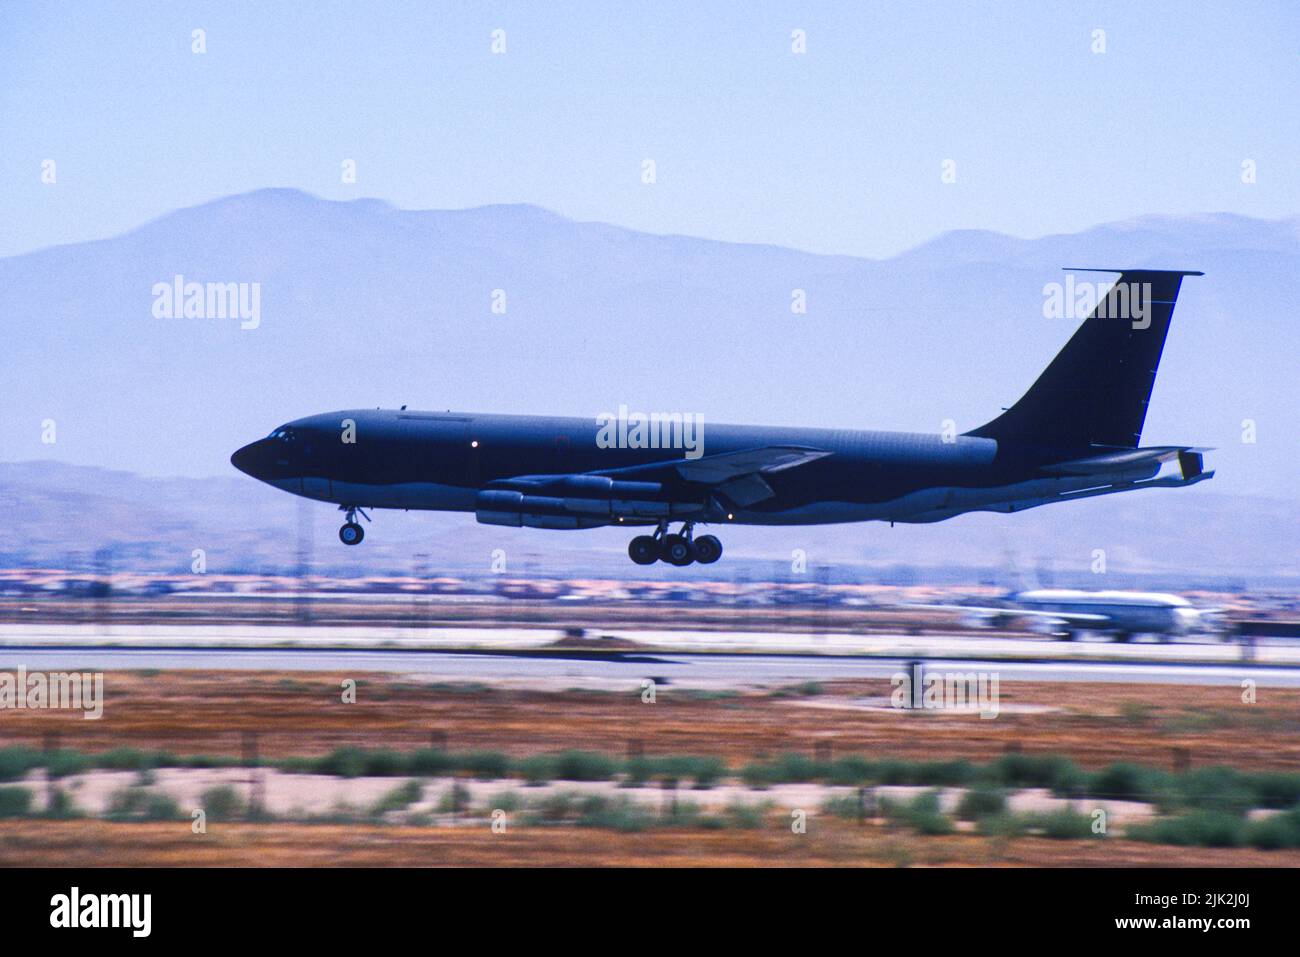 United States Air Force KC-135 landing at March Air Force Base in San Bernardino, California Stock Photo